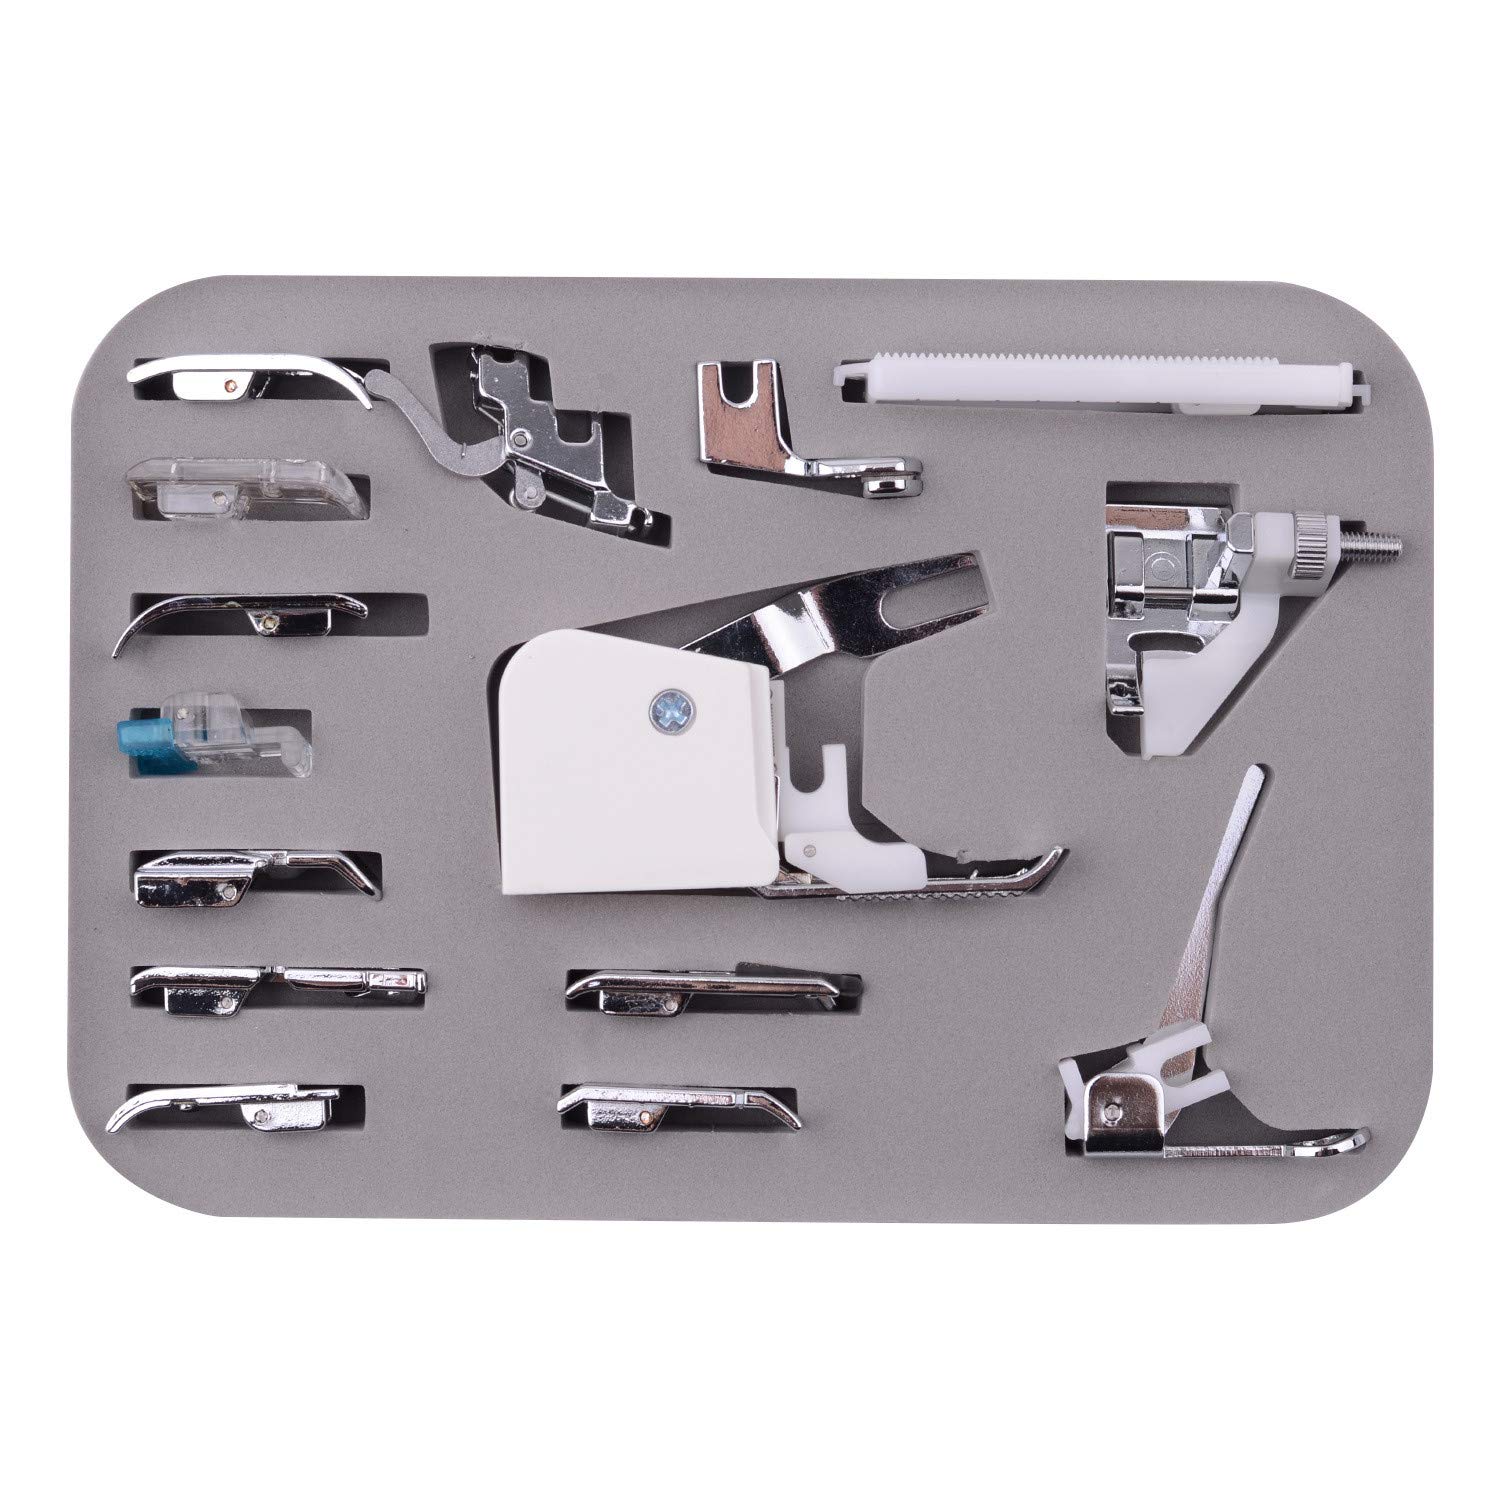 Iwähle 15 Pcs Nähmaschine Presser Walking Feet Kit, Cy-015 Low Shank Adapter Zipper, Household Sewing Machine Accessories